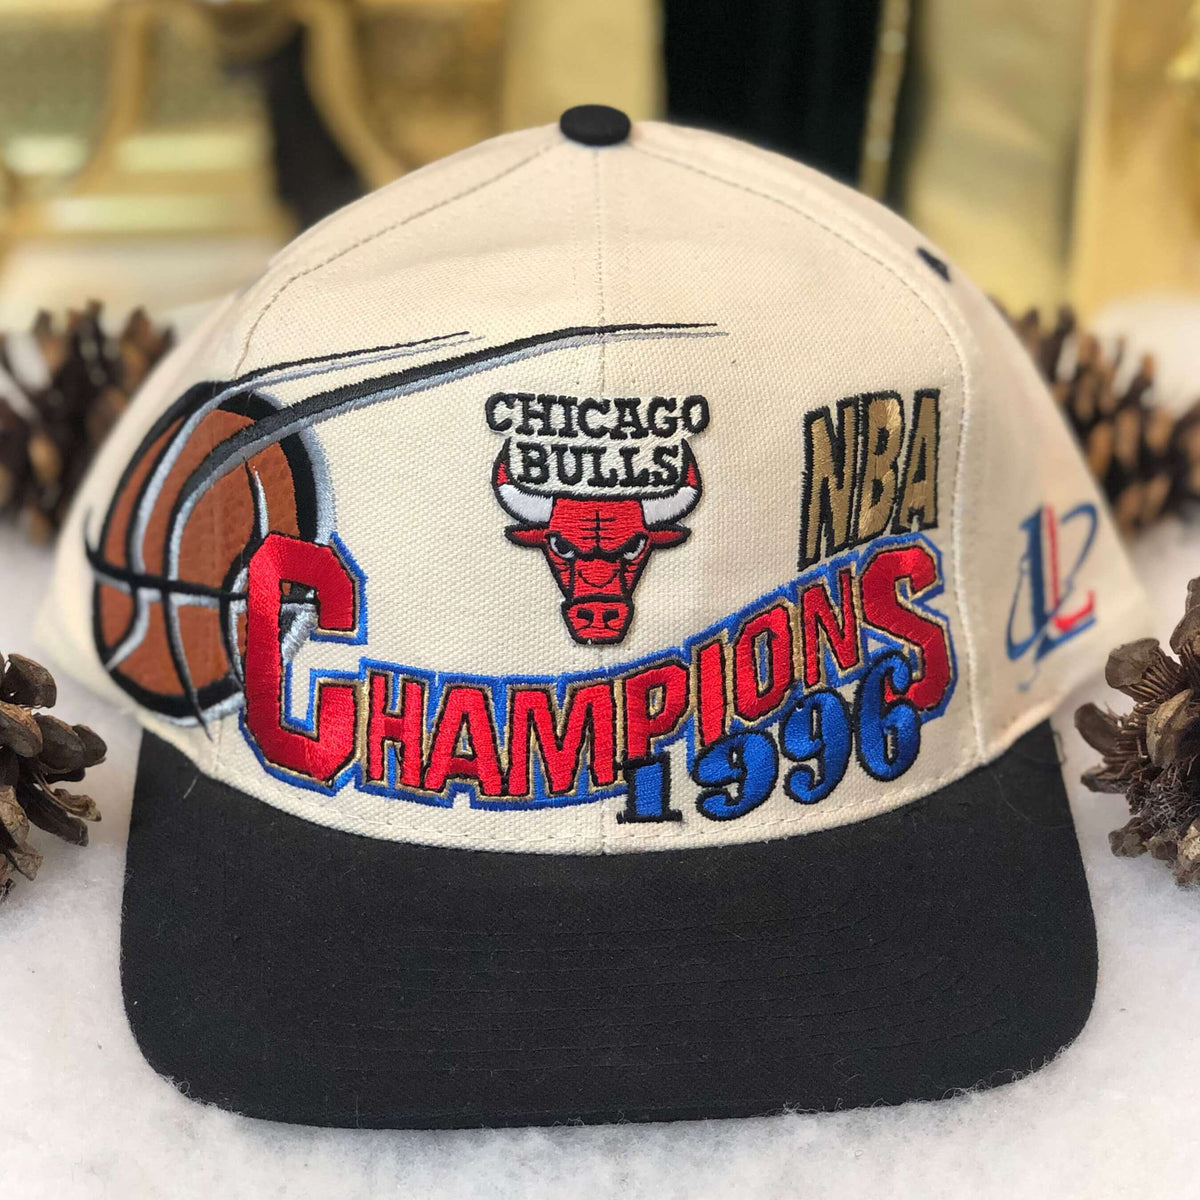 chicago bulls 96 championship hat